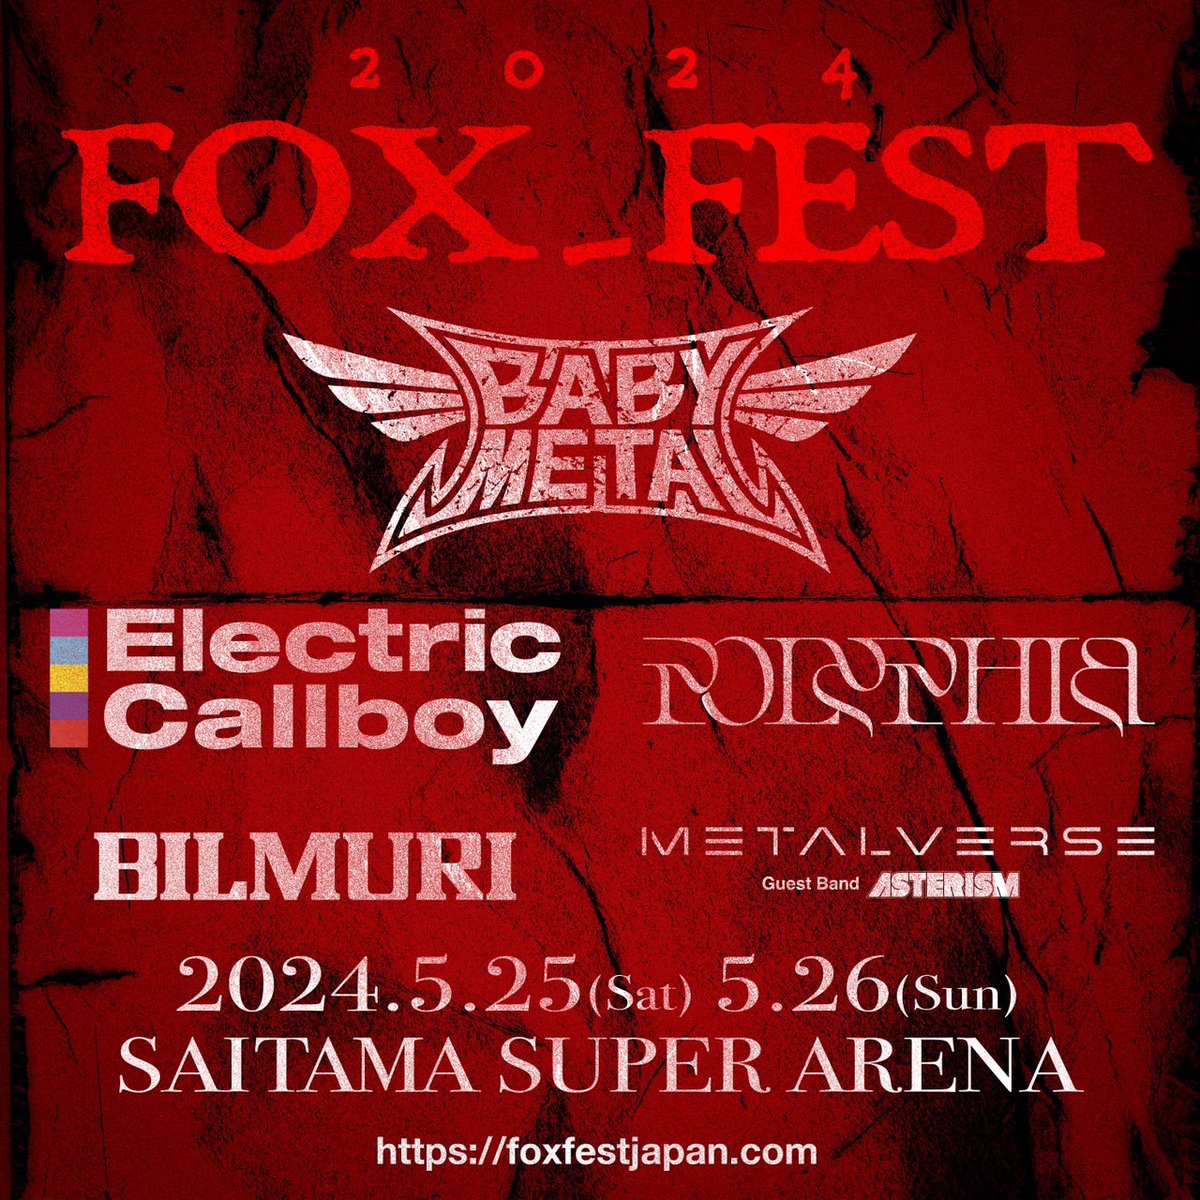 🦊 FOX_FEST🦊 プレリザーブ2次先行スタート!!💨

🎫チケット受付期間 4.19(金)12:00〜5.6(月)23:59  
📌プレリザーブ2次先行
w.pia.jp/t/fox-fest/

#BABYMETAL #FOXFEST
@ElectricCallboy @polyphia
@BilmuriTweets @metalverseworld @ASTERISM2016